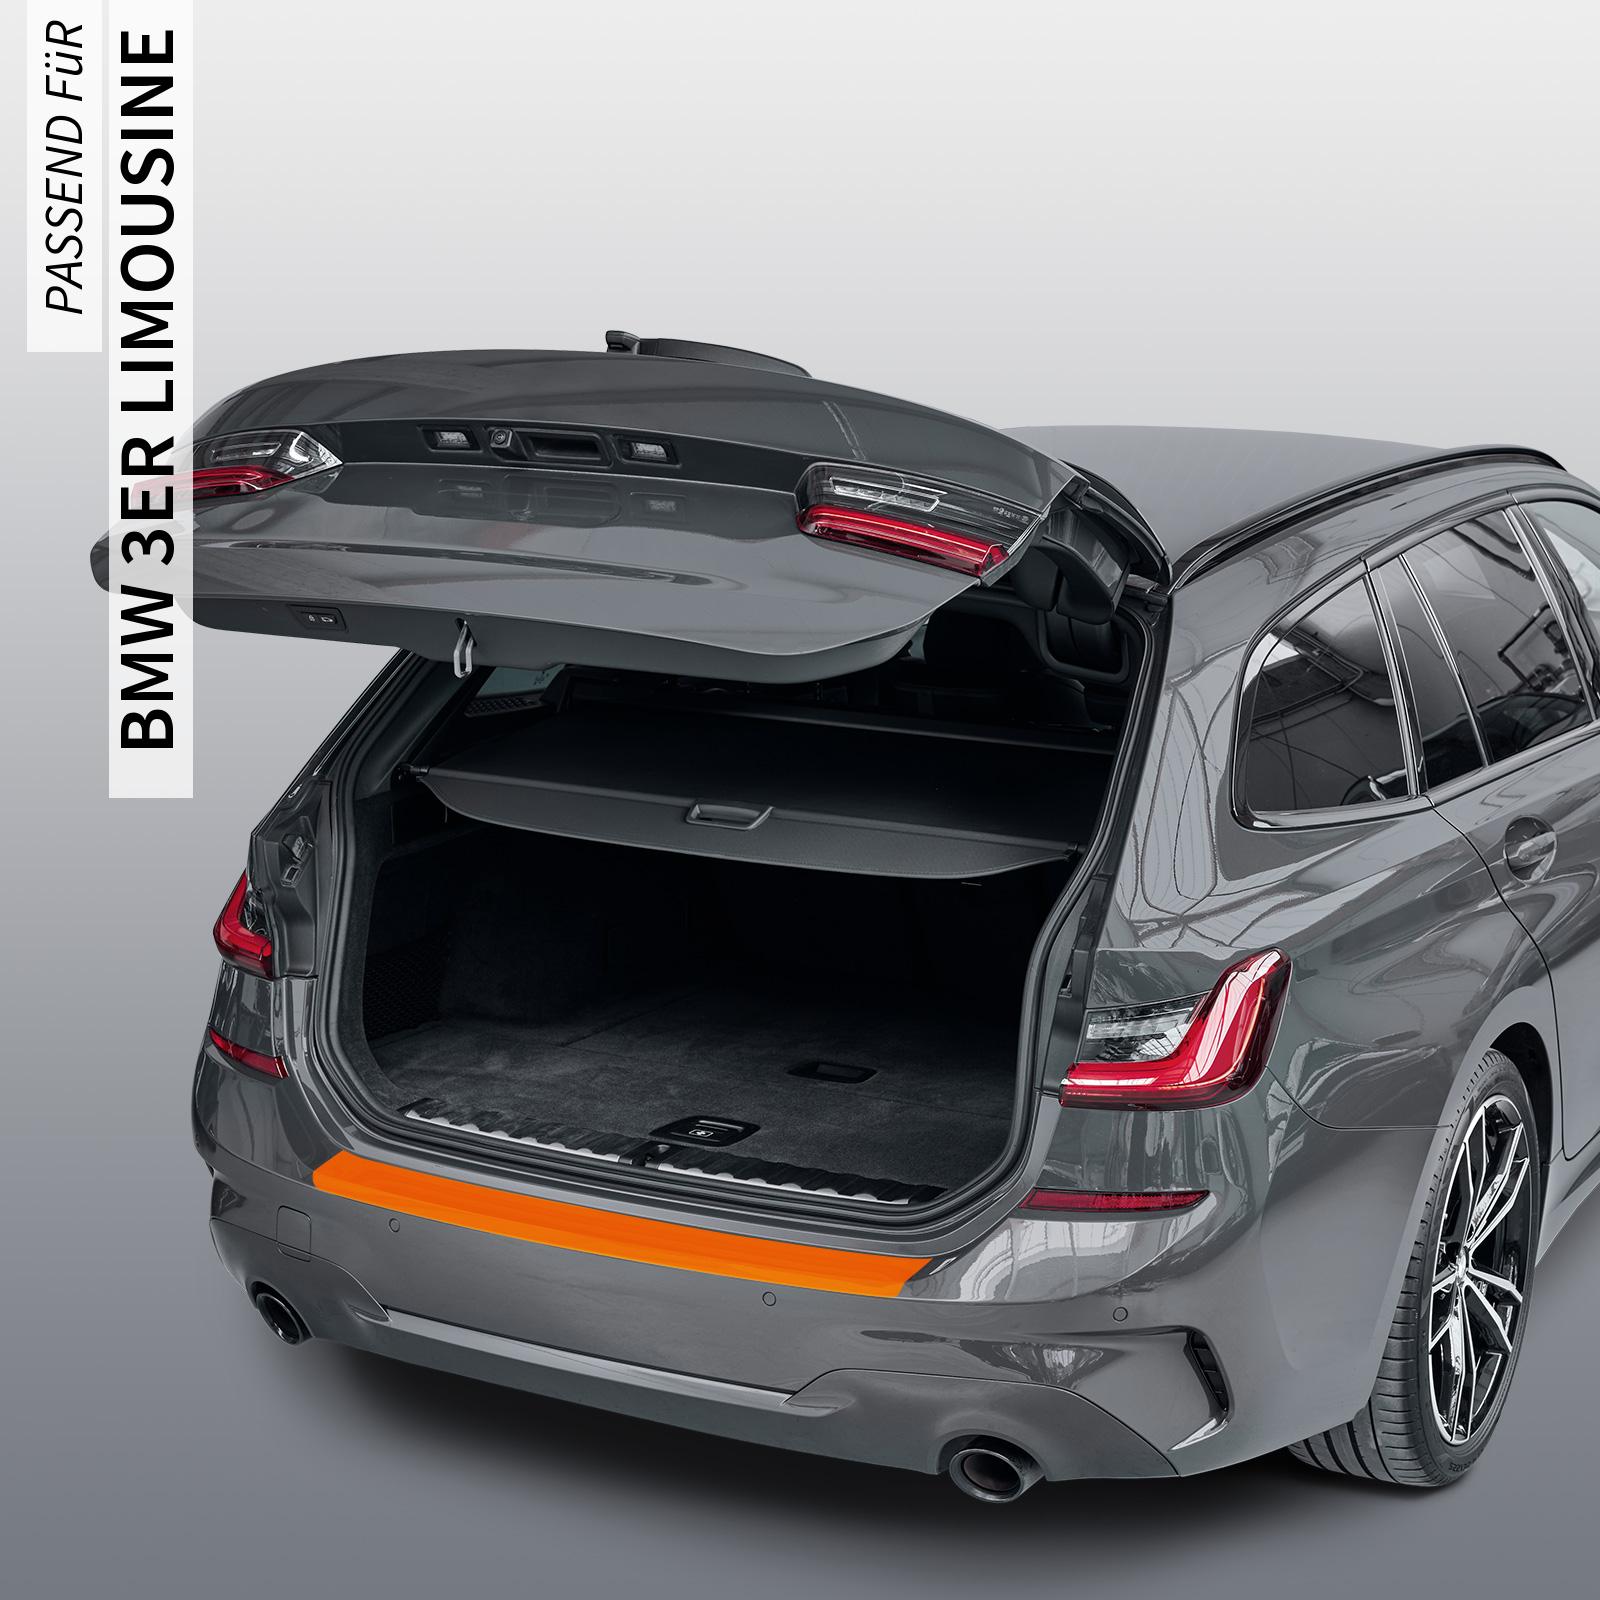 Ladekantenschutzfolie - Transparent Glatt MATT 110 µm stark  für BMW 3er Limousine Typ G20, BJ 03/2019-06/2022